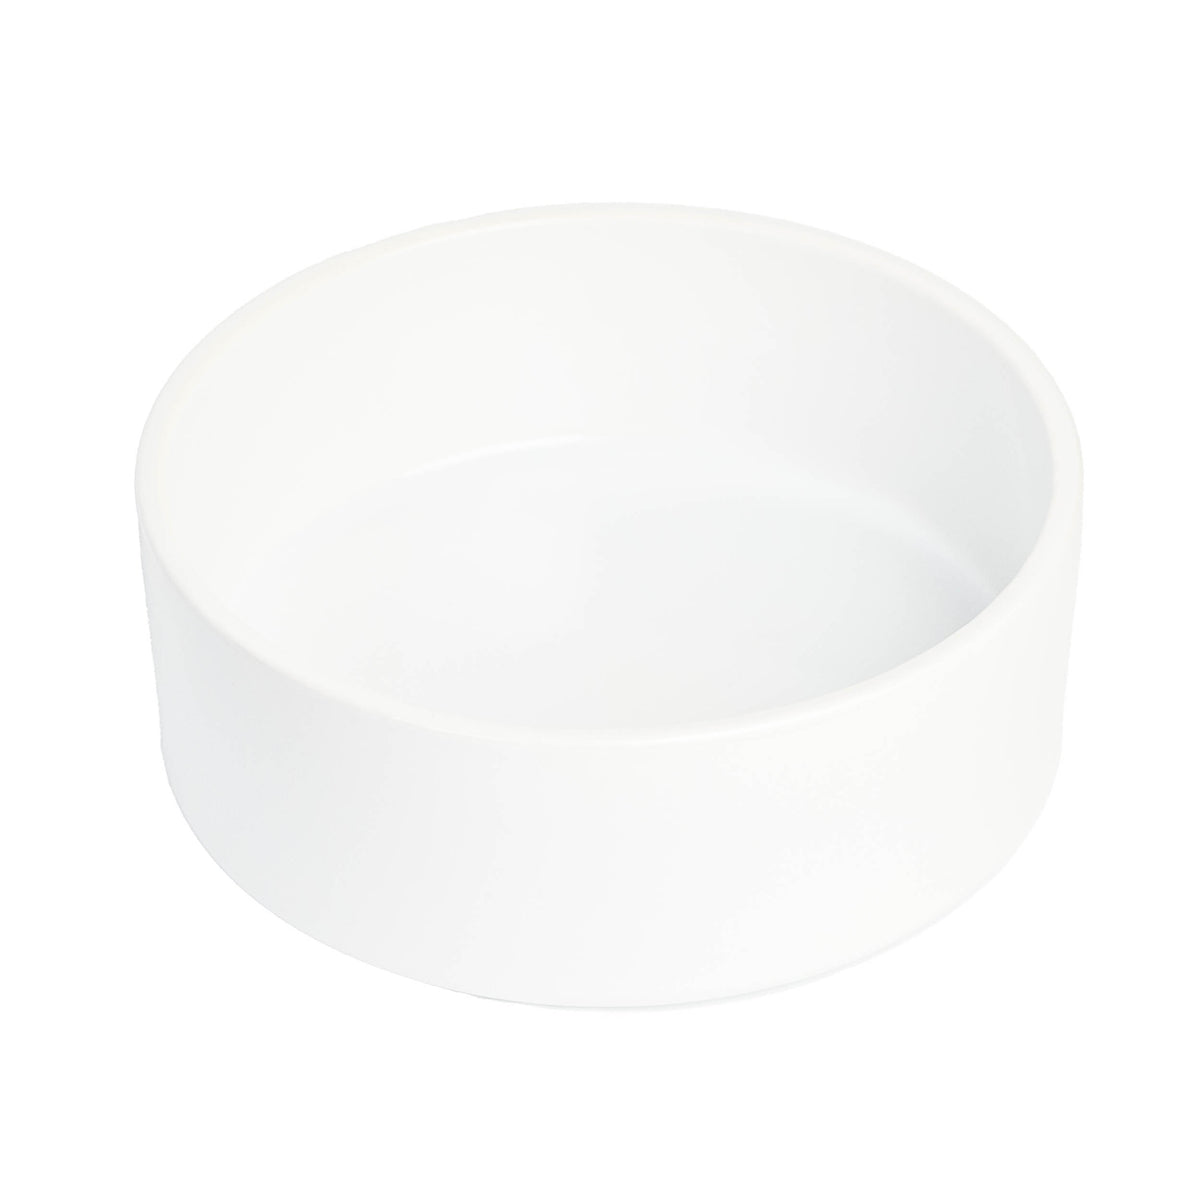 Personalised bowl for cats / ceramic - 22oz 650ml (design 2)